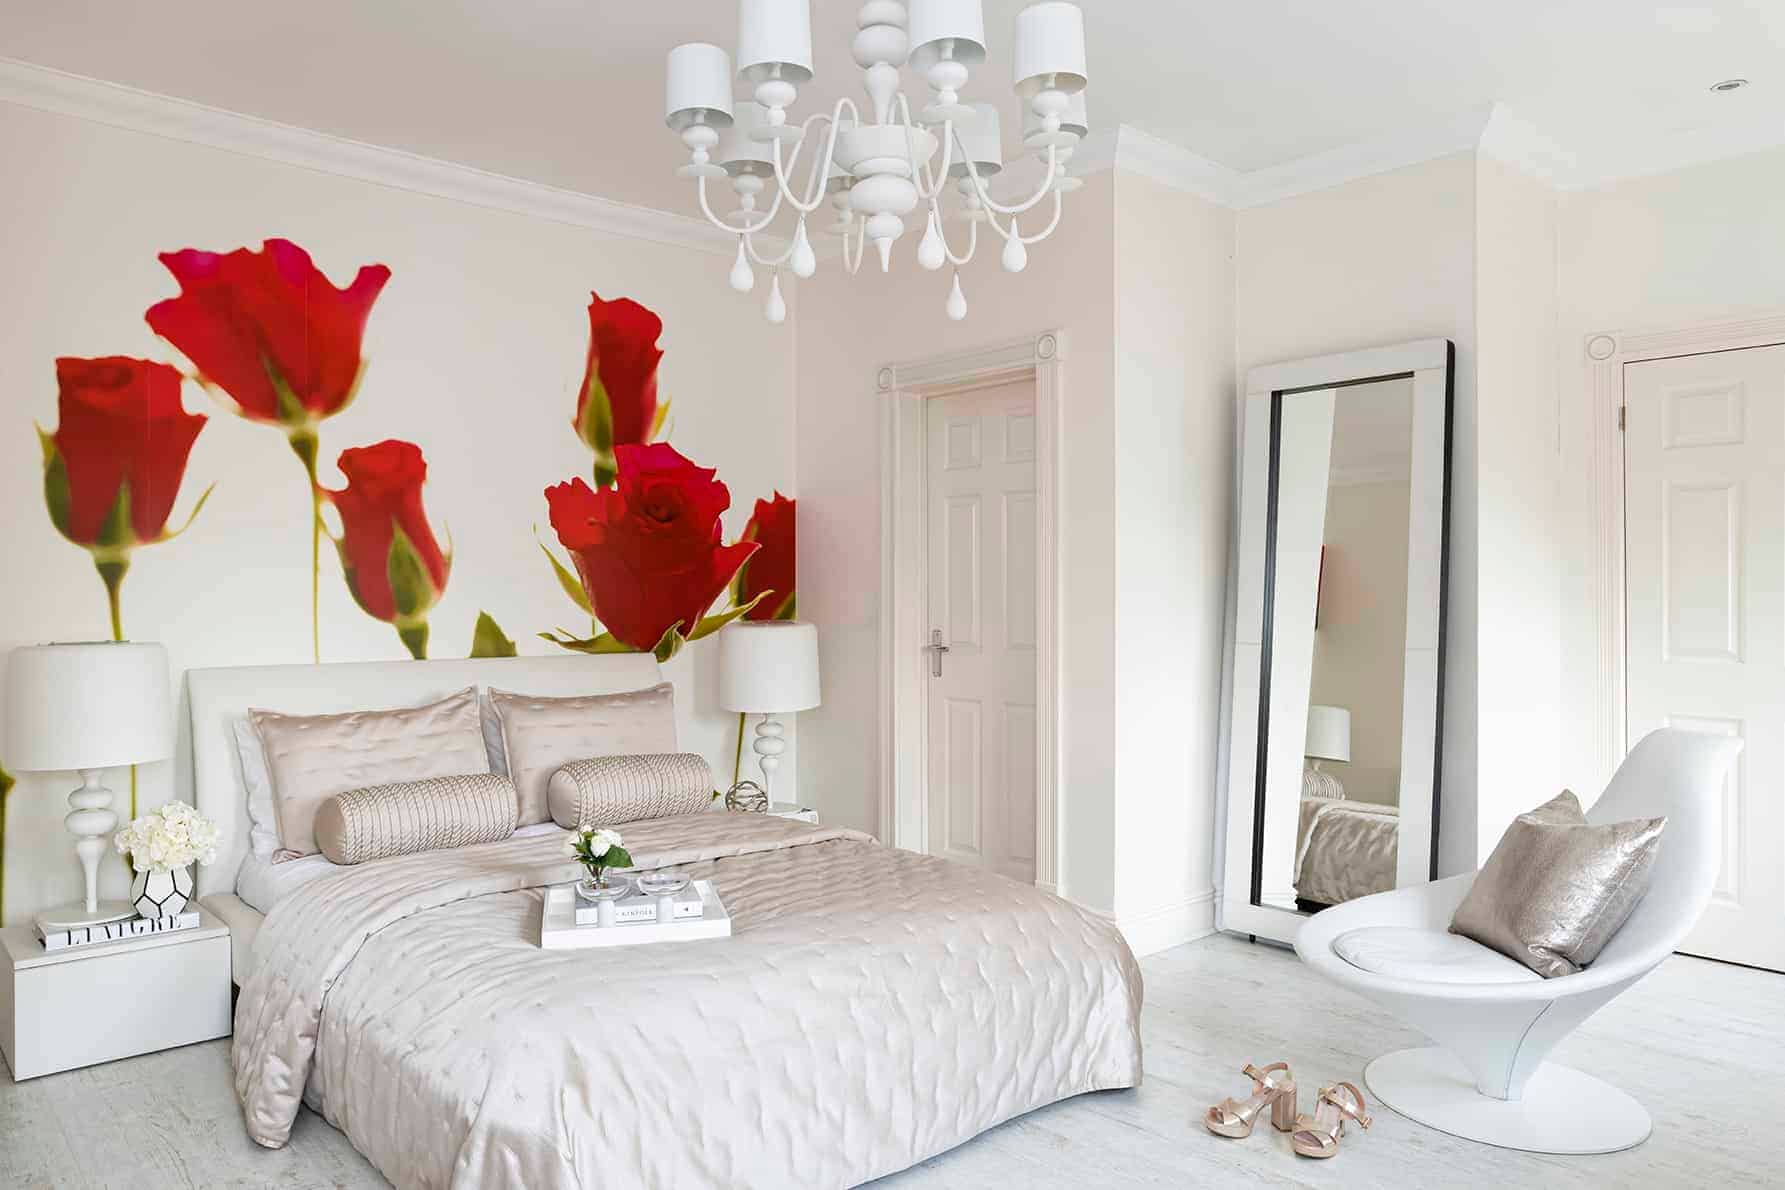 The biggest modern bedroom interior design ideas